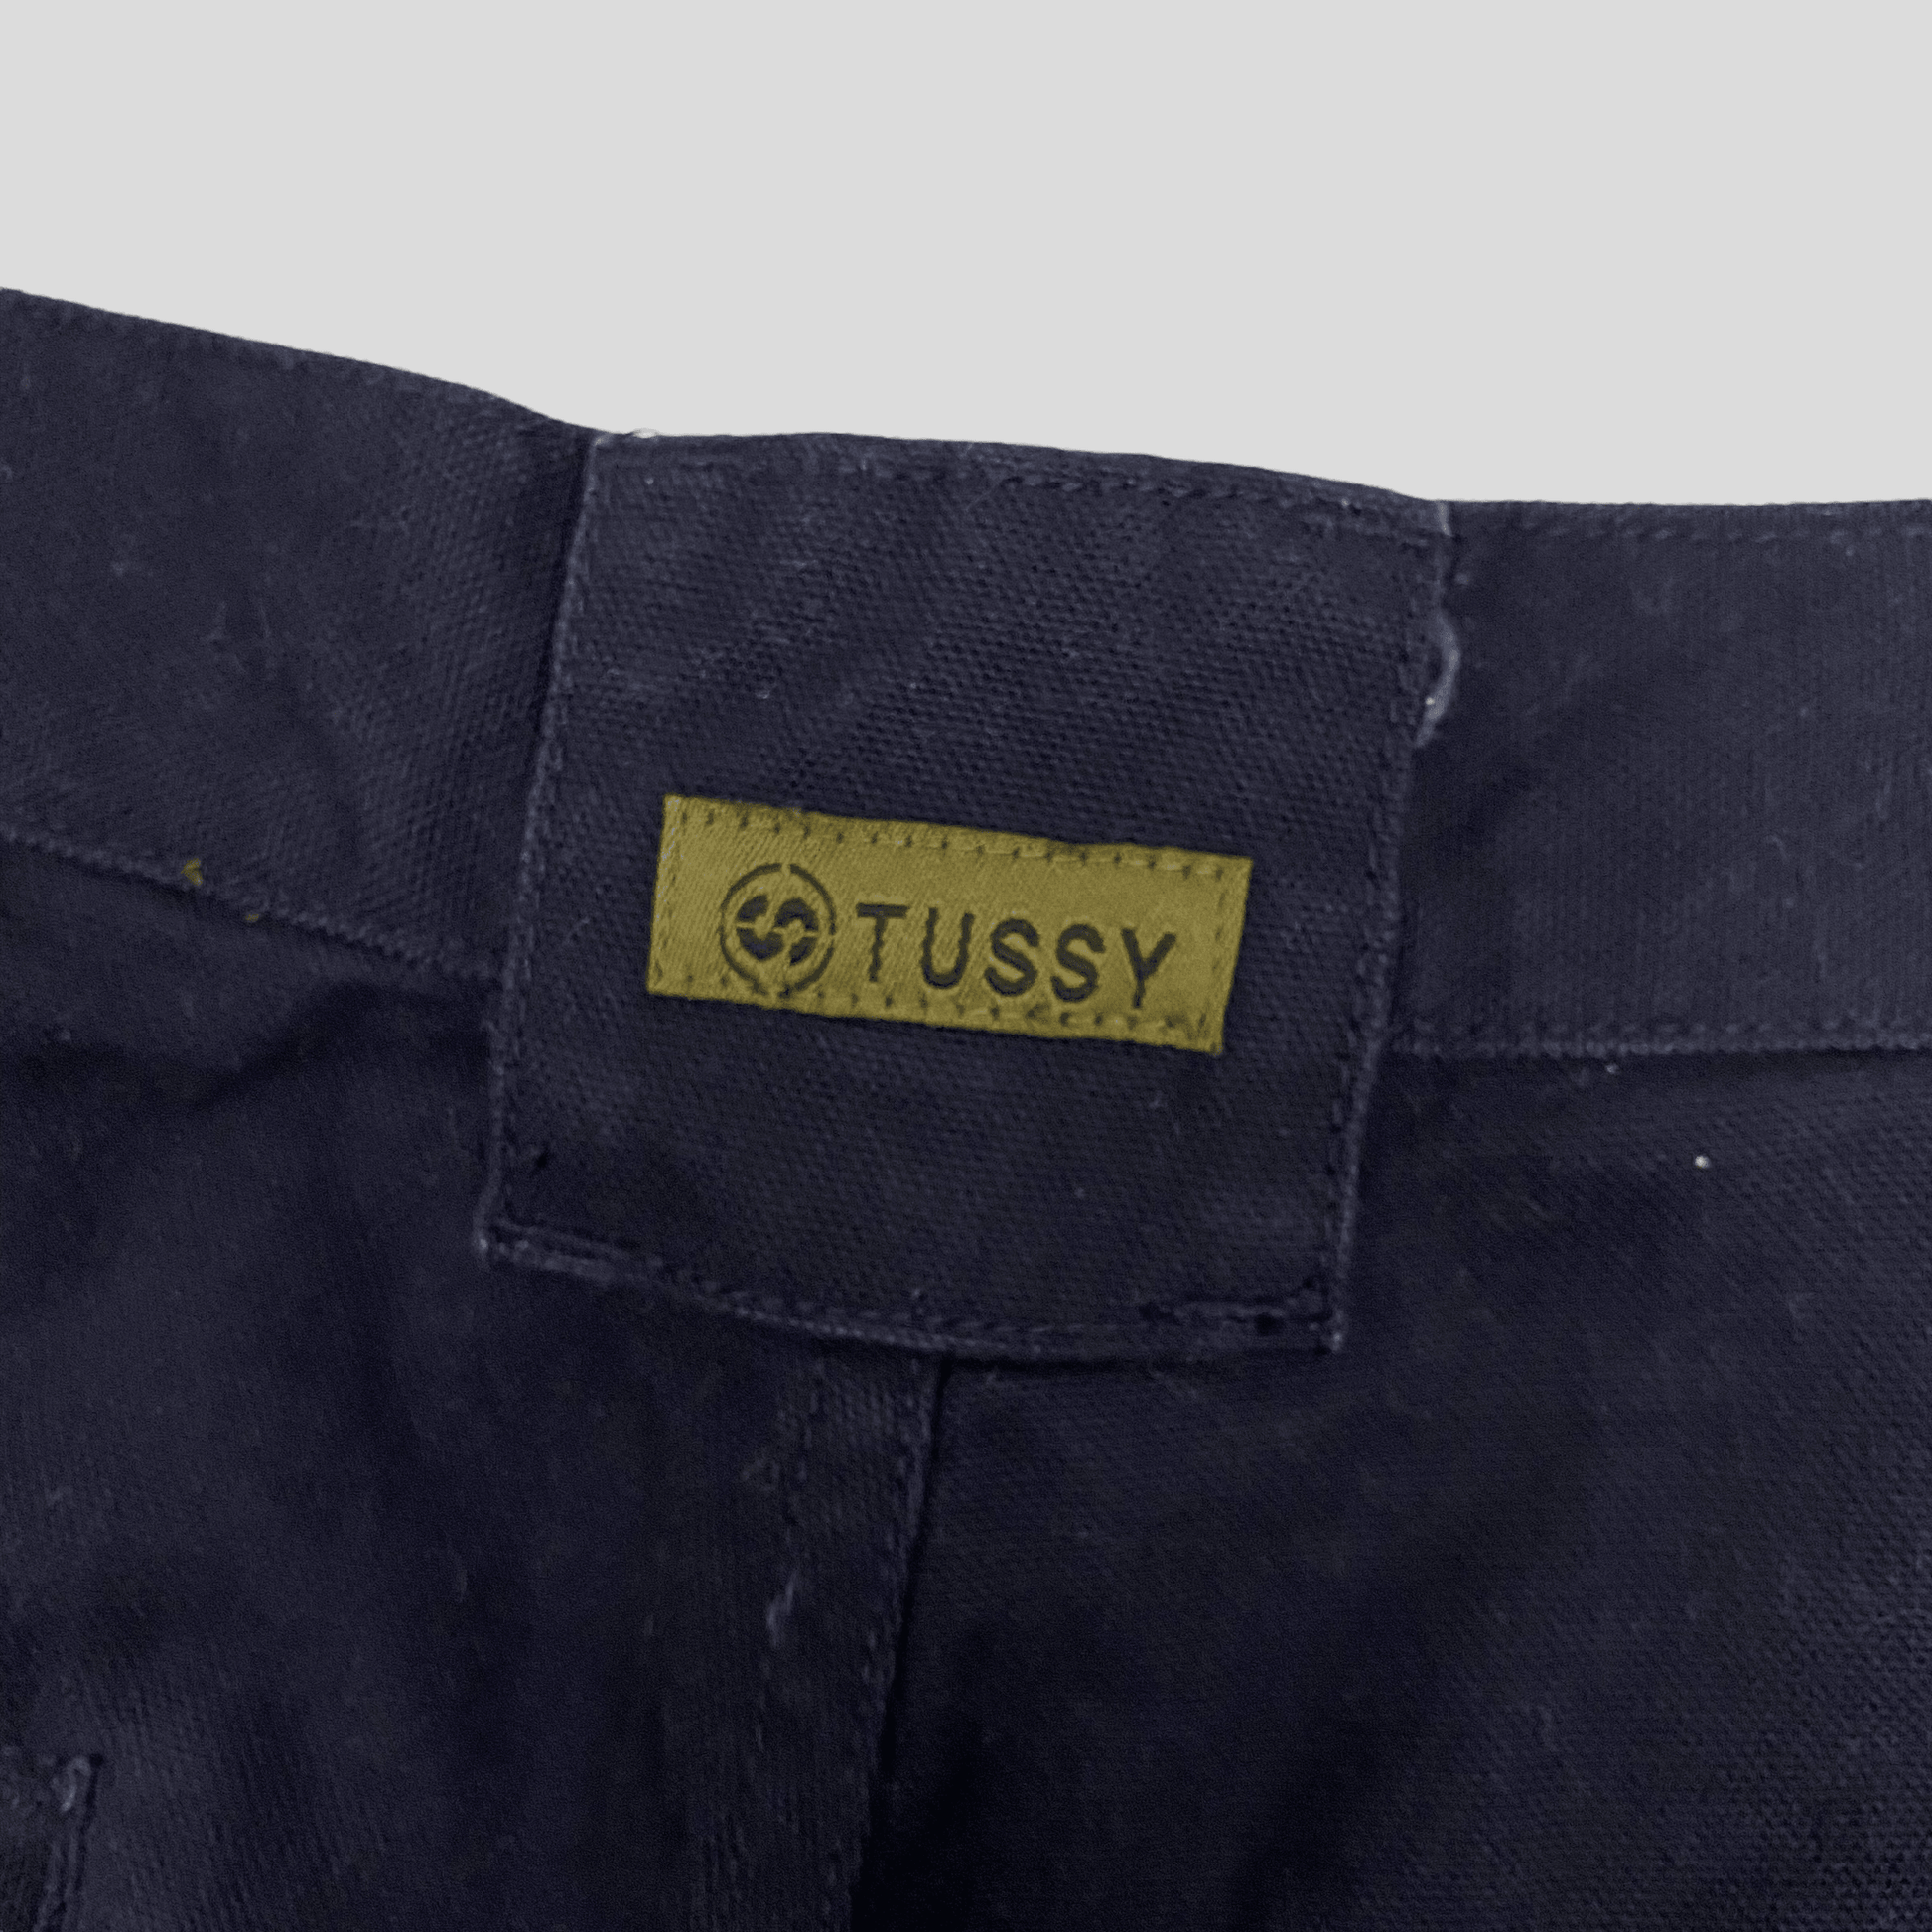 Stussy 90’s Surplus 7 Pockets Shorts - W36 - Known Source